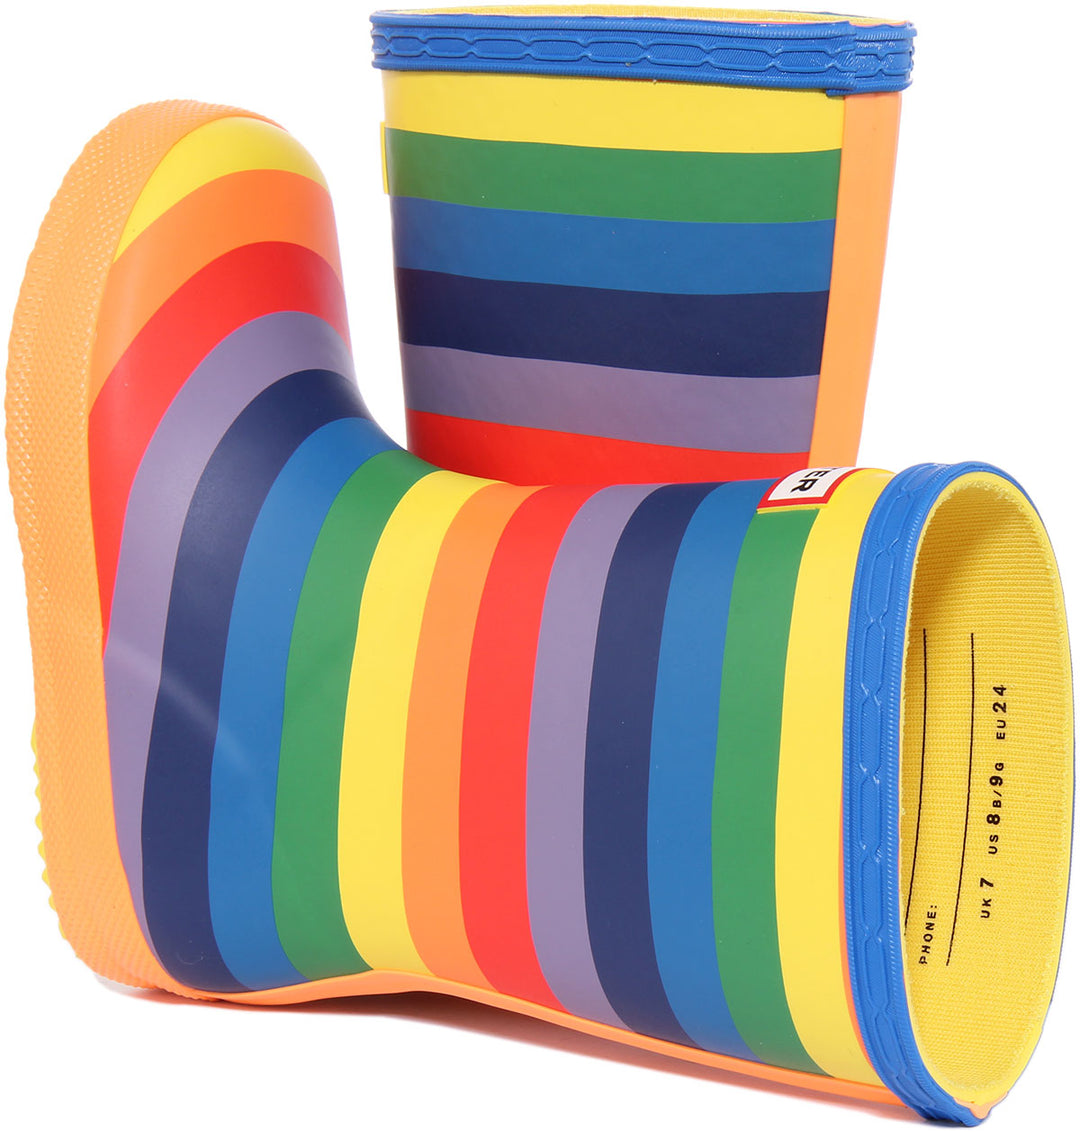 Hunter Kids First In Multicolour Strips For Infants